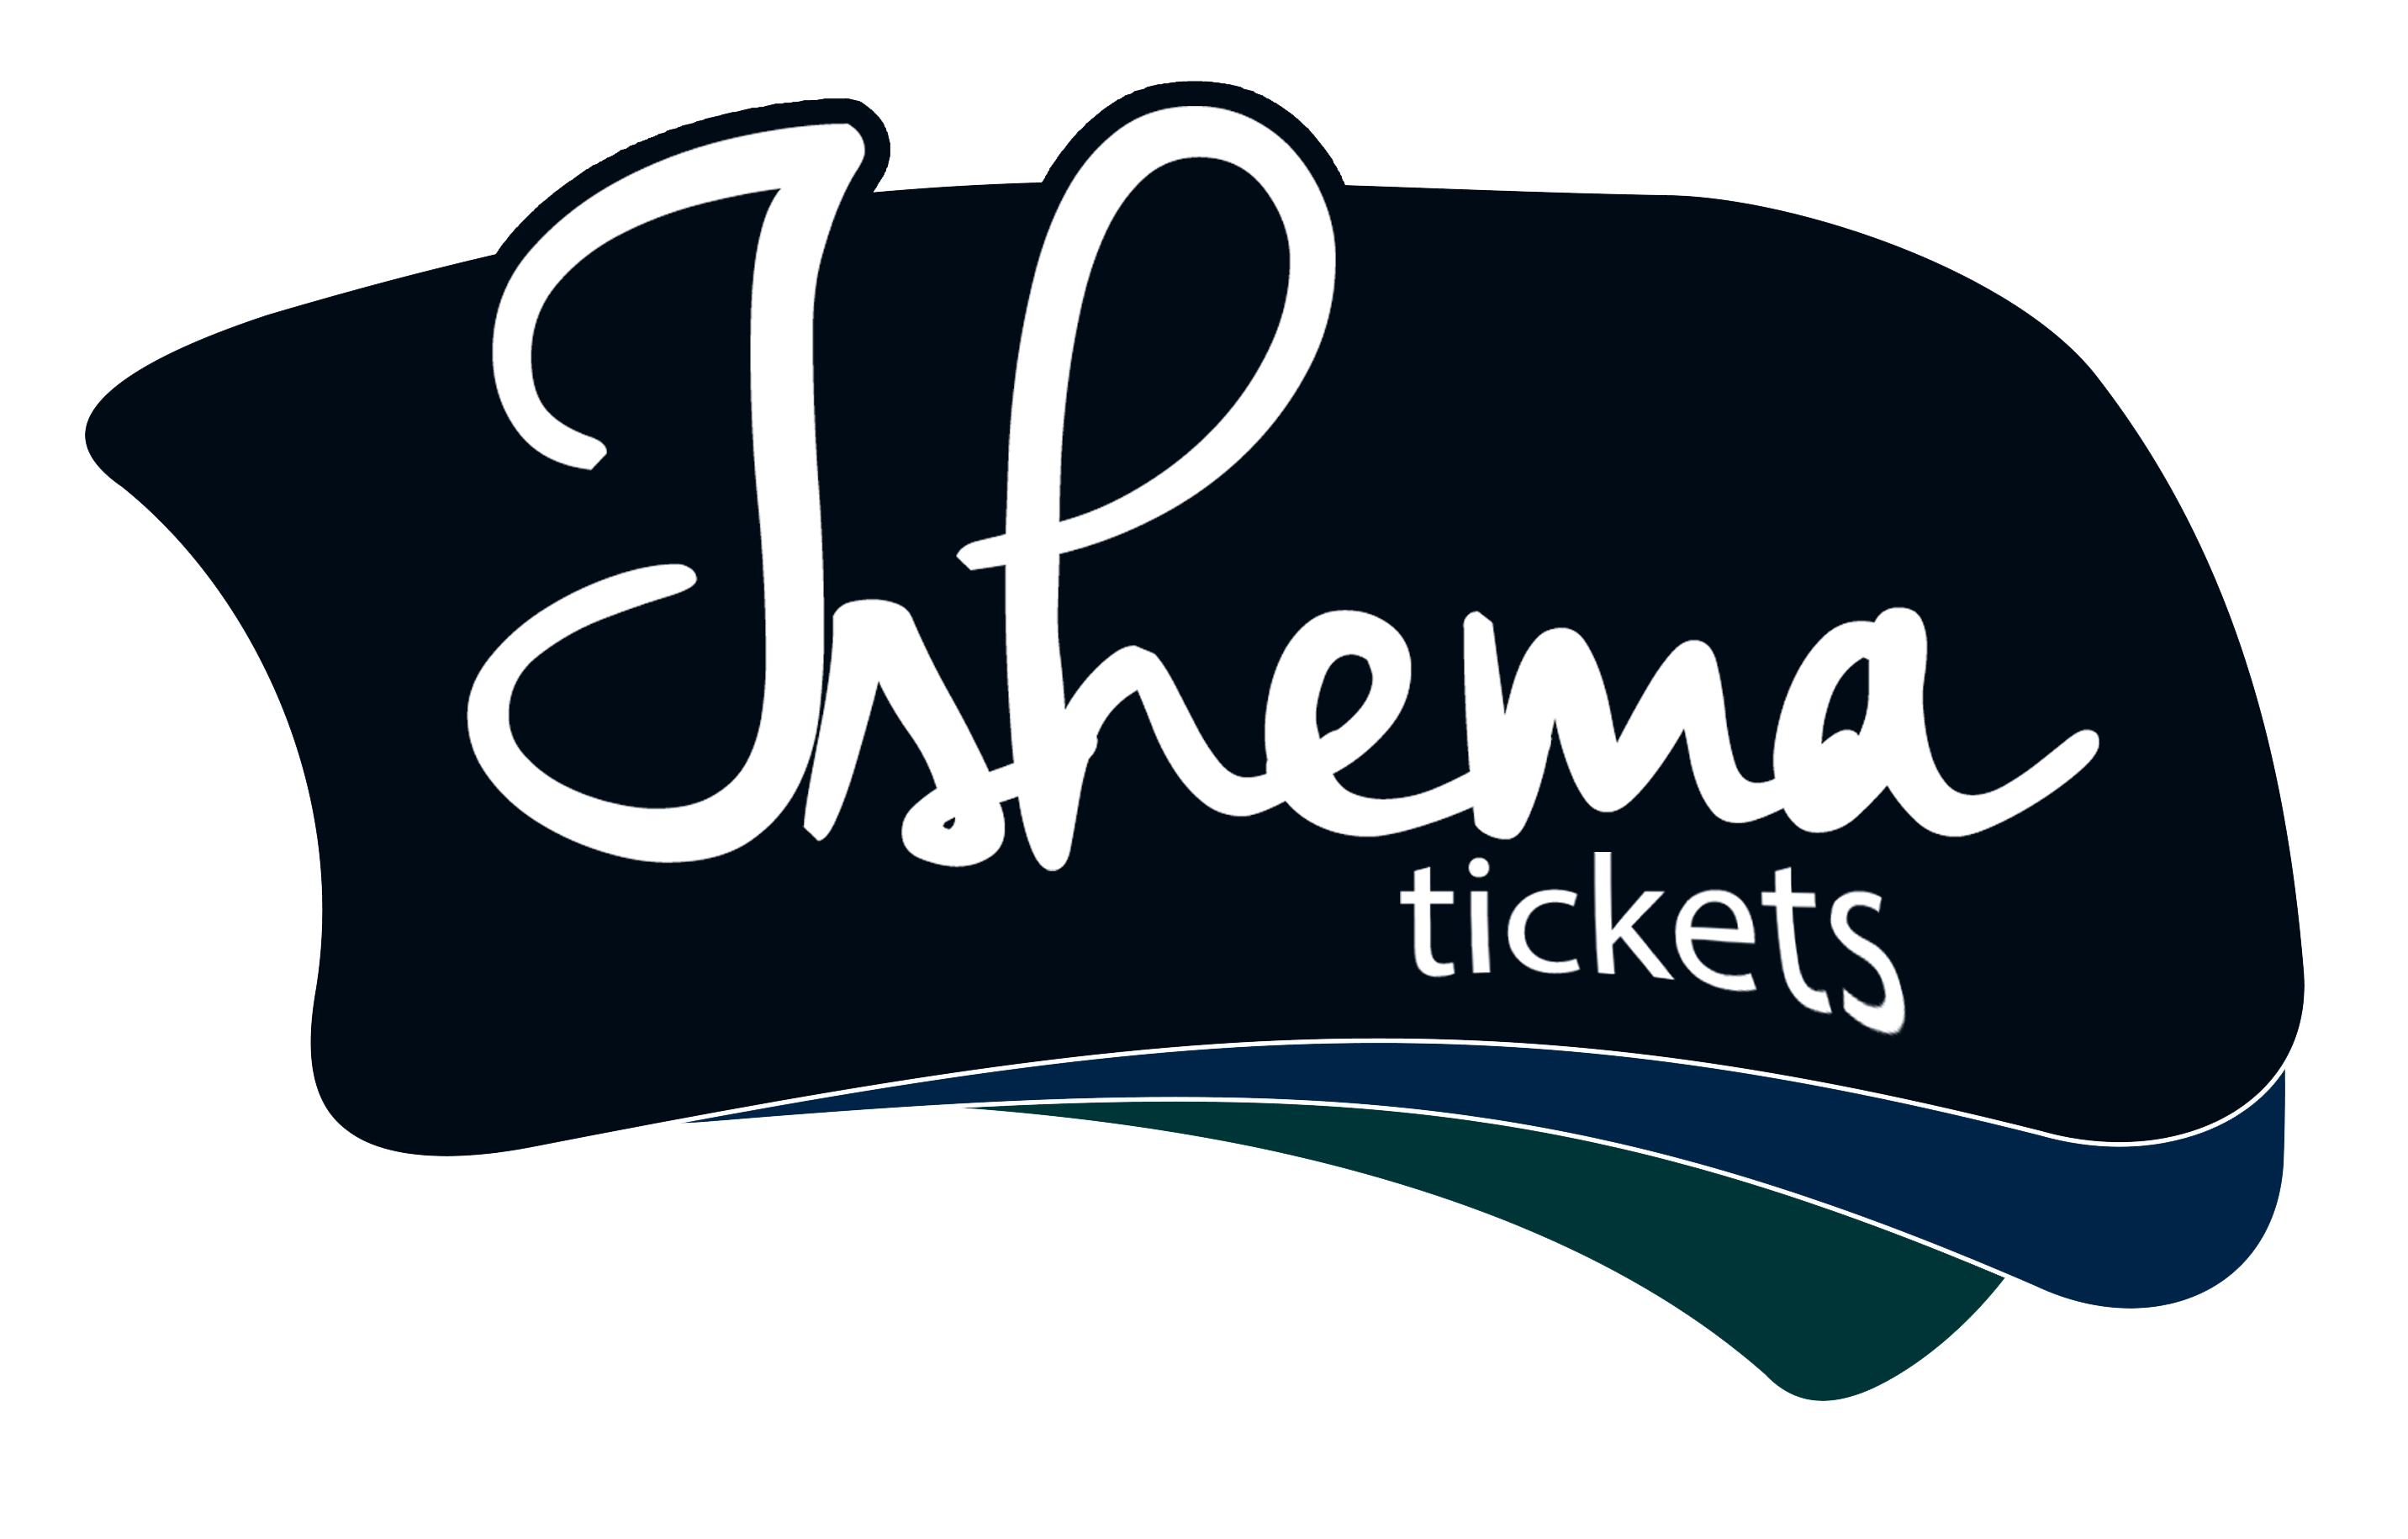 ISHEMA Tickets